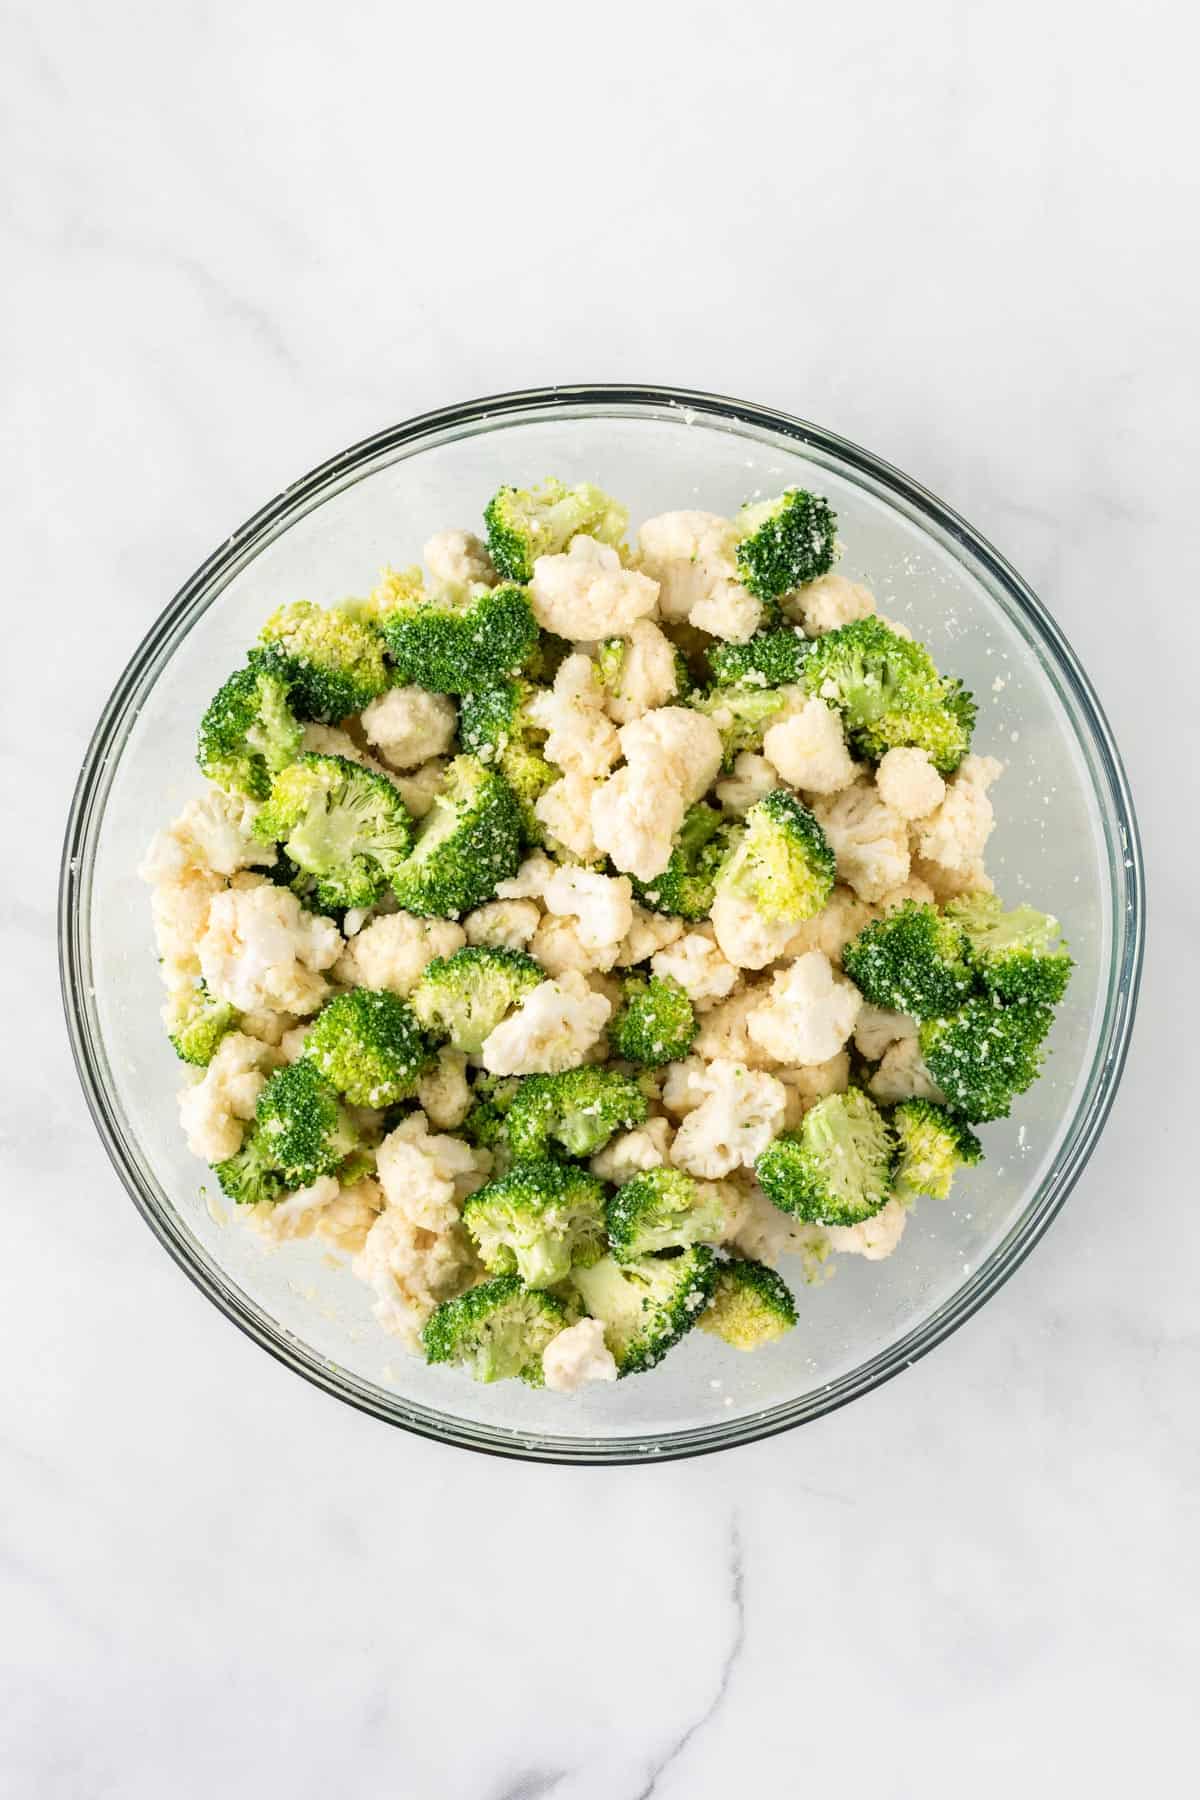 seasoned broccoli and cauliflower mixed together